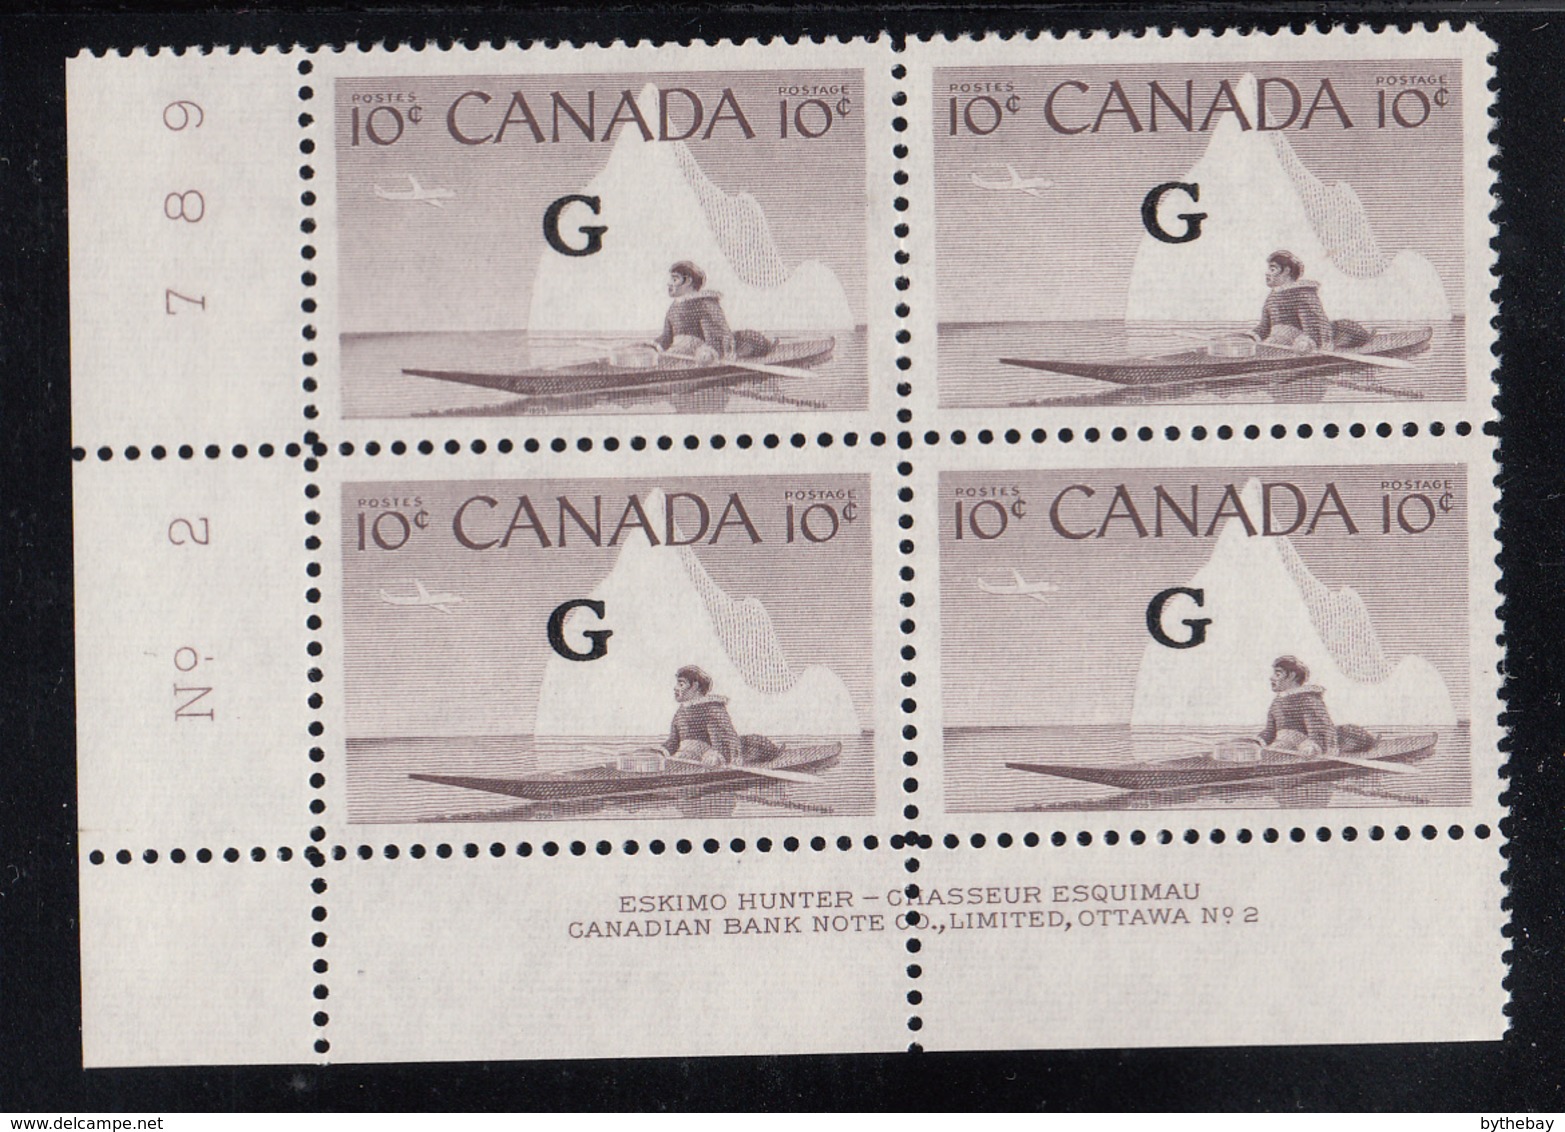 Canada MNH Scott #O39 'G' Overprint On 10c Inuk, Kayak Plate #2 Lower Left PB - Surchargés